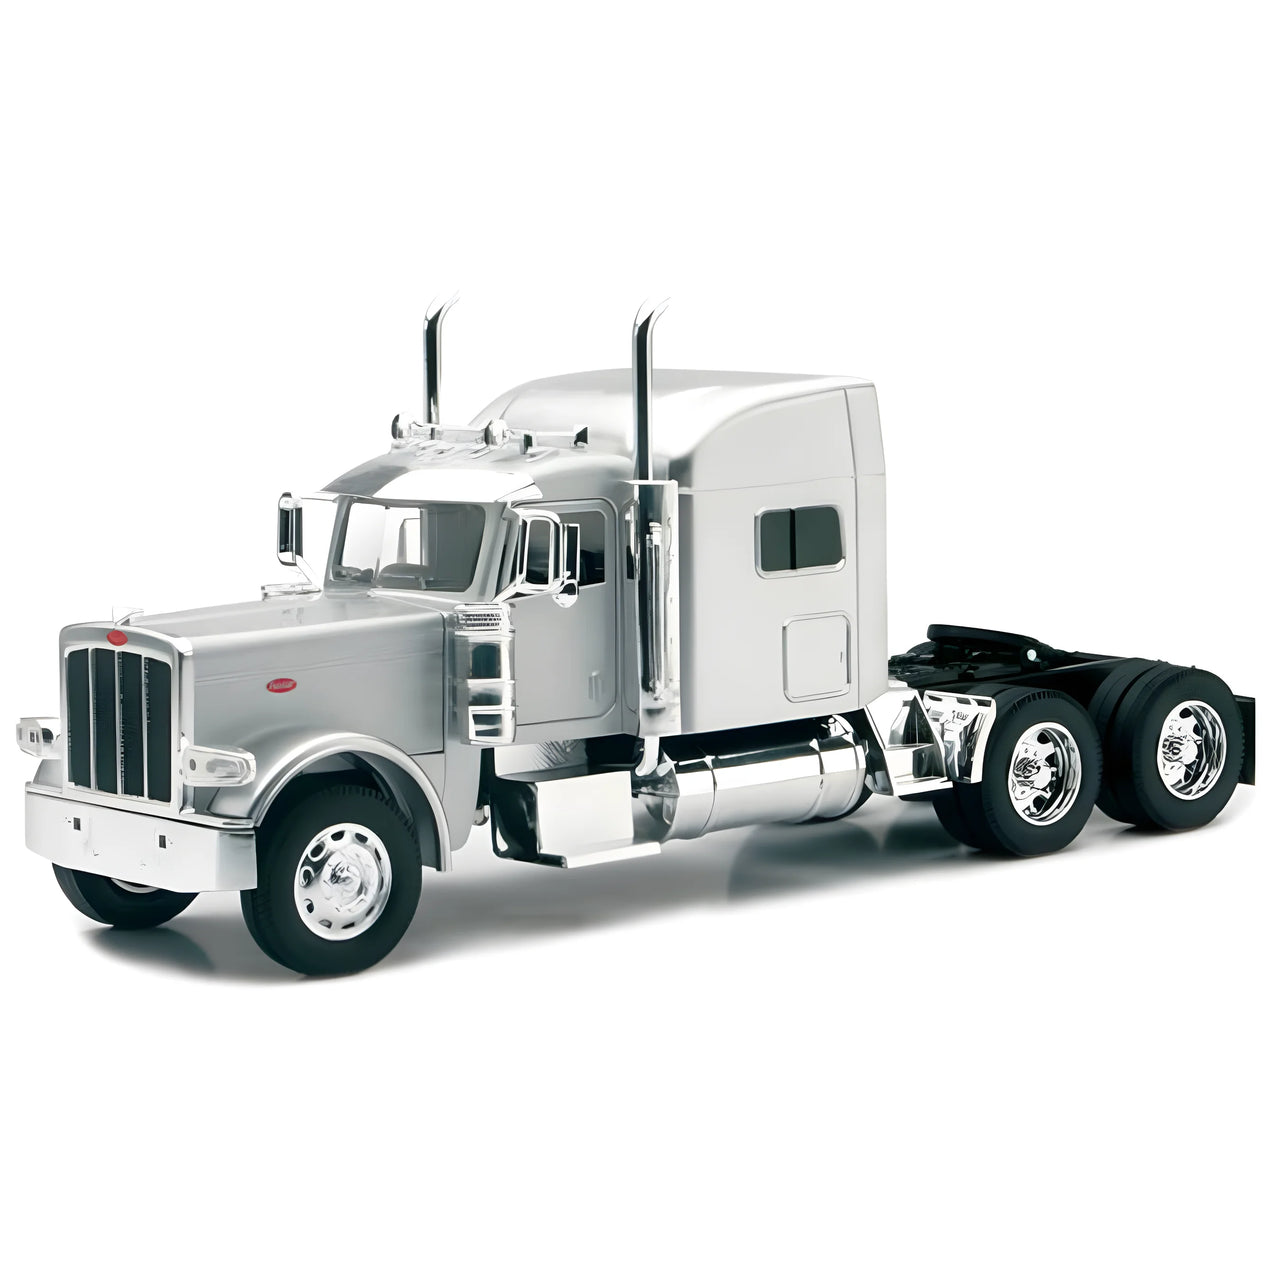 SS-52921-S Tractor Truck Peterbilt 389 Scale 1:32